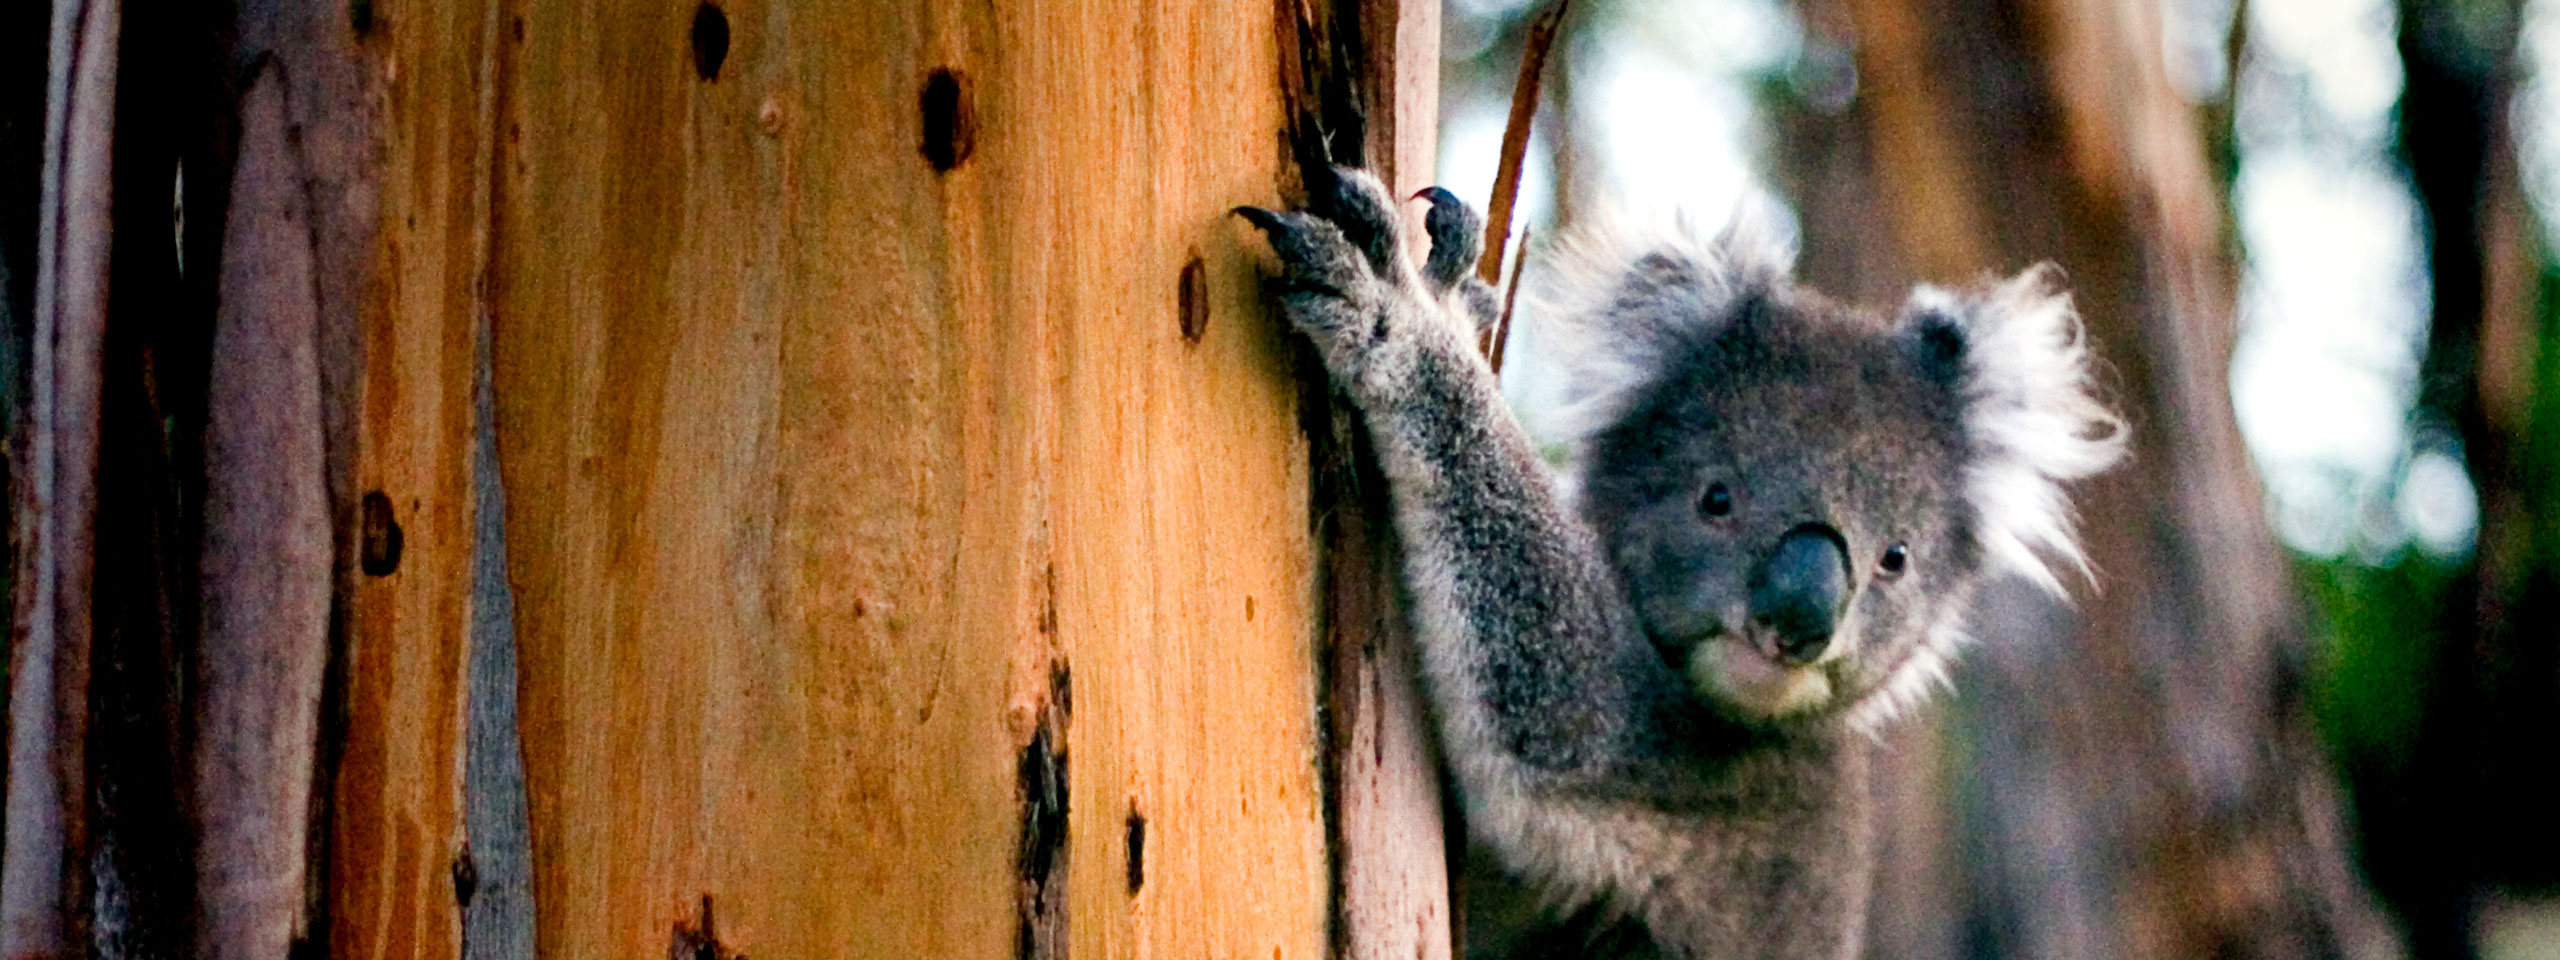 Native Australian Koala